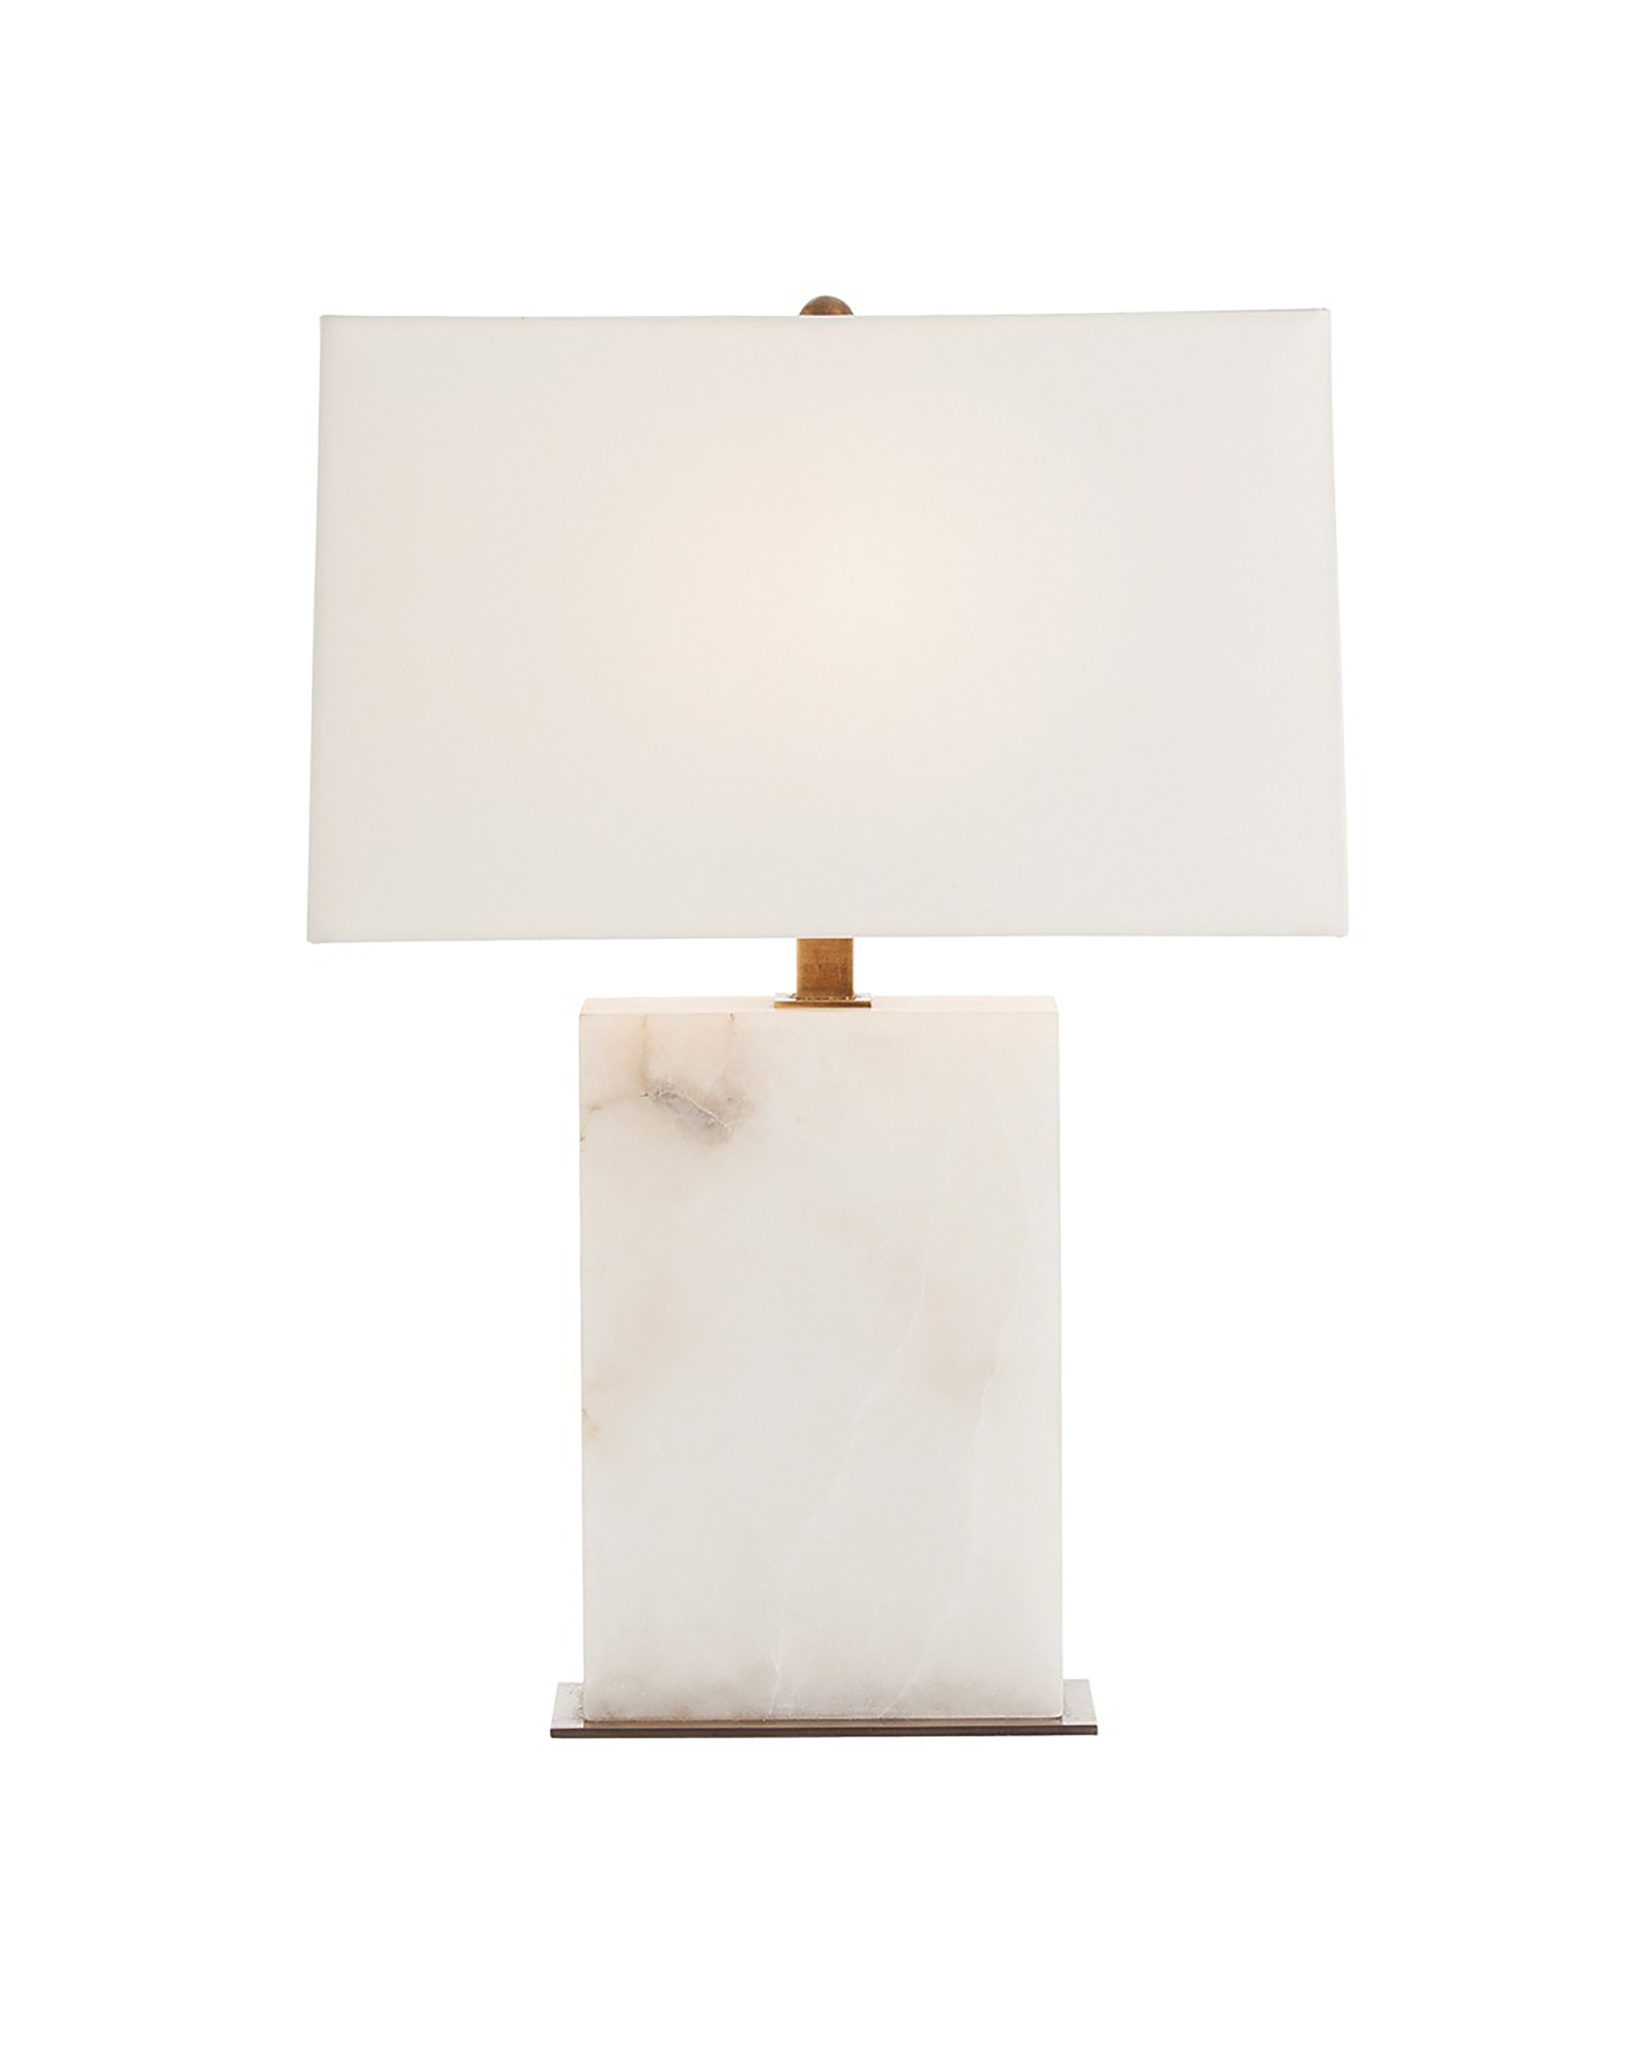 Marble based lamp